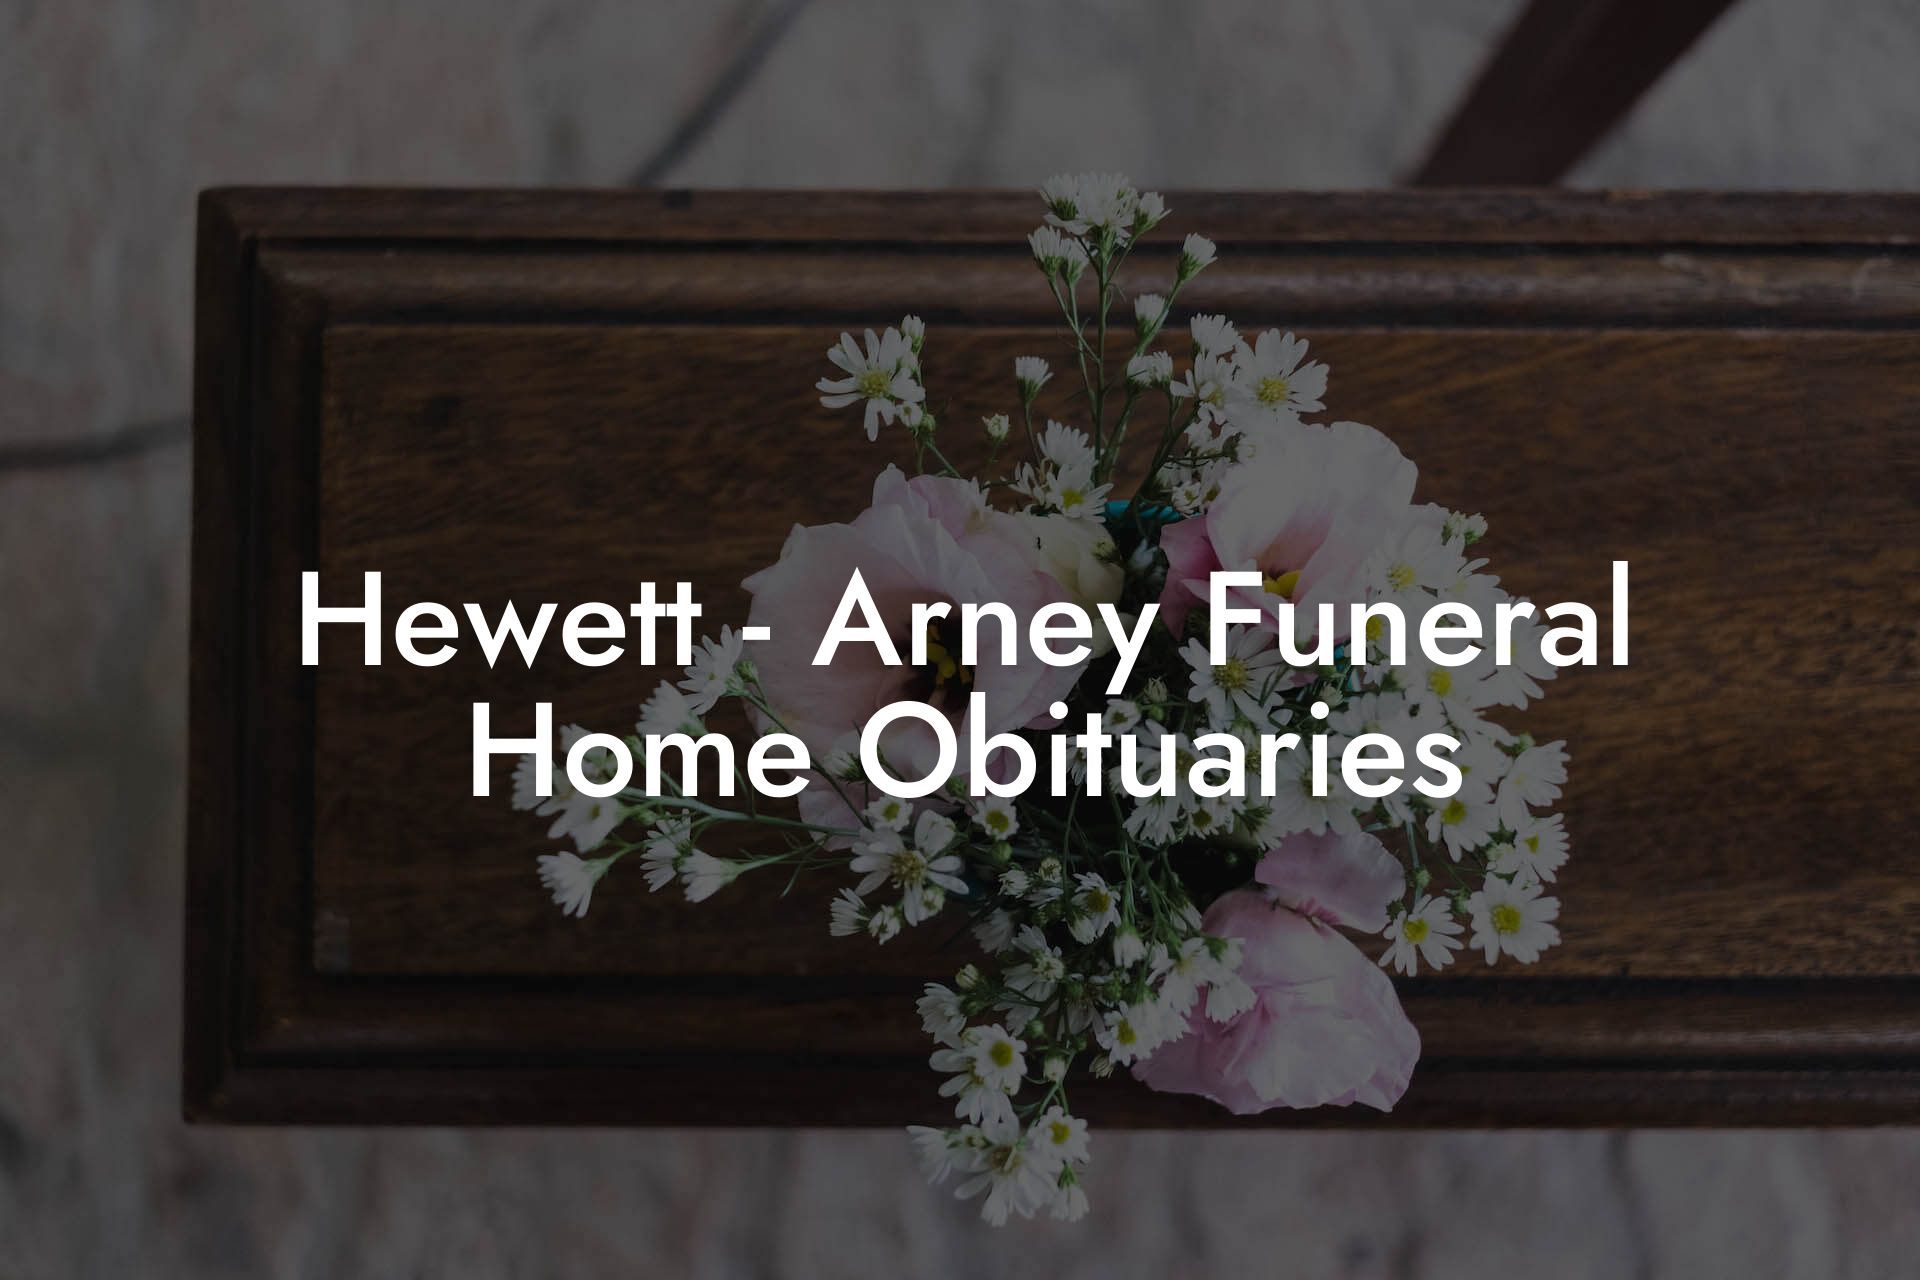 Hewett - Arney Funeral Home Obituaries